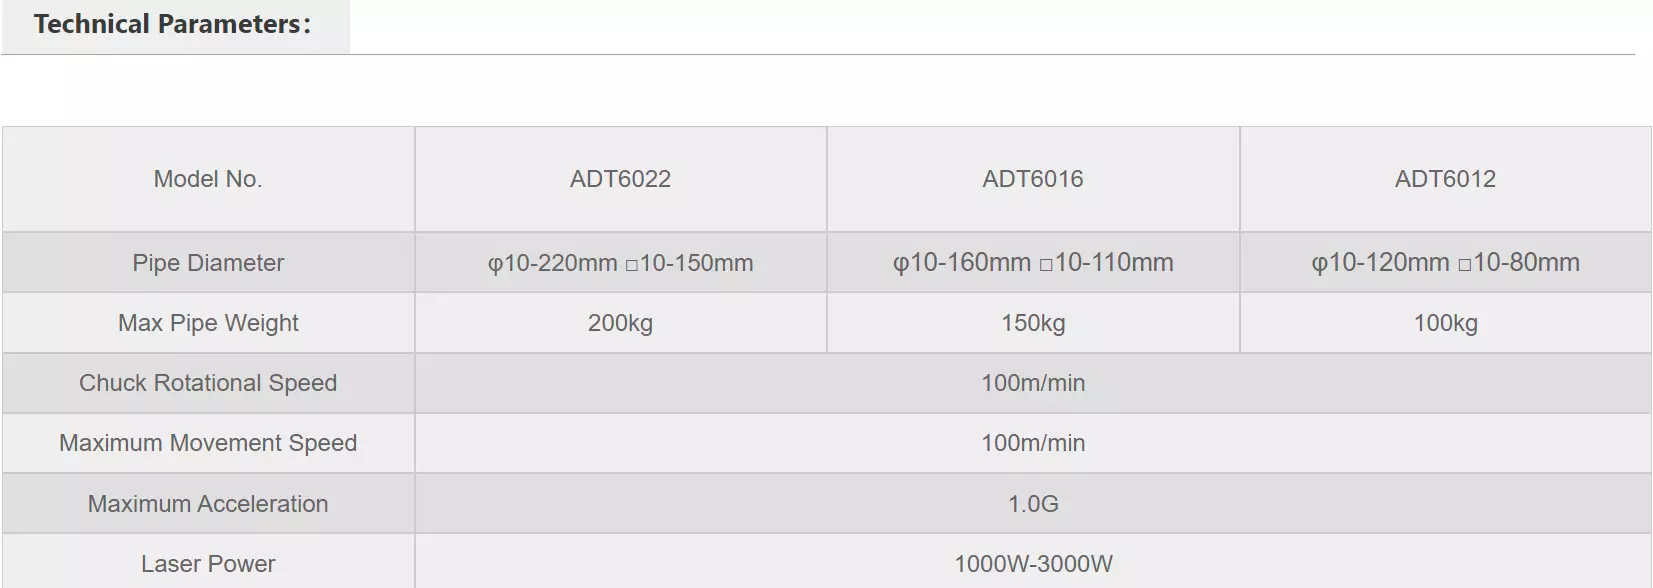 ADTR-6022 Professional Fiber Laser Pipe Cutting Machine - Specification